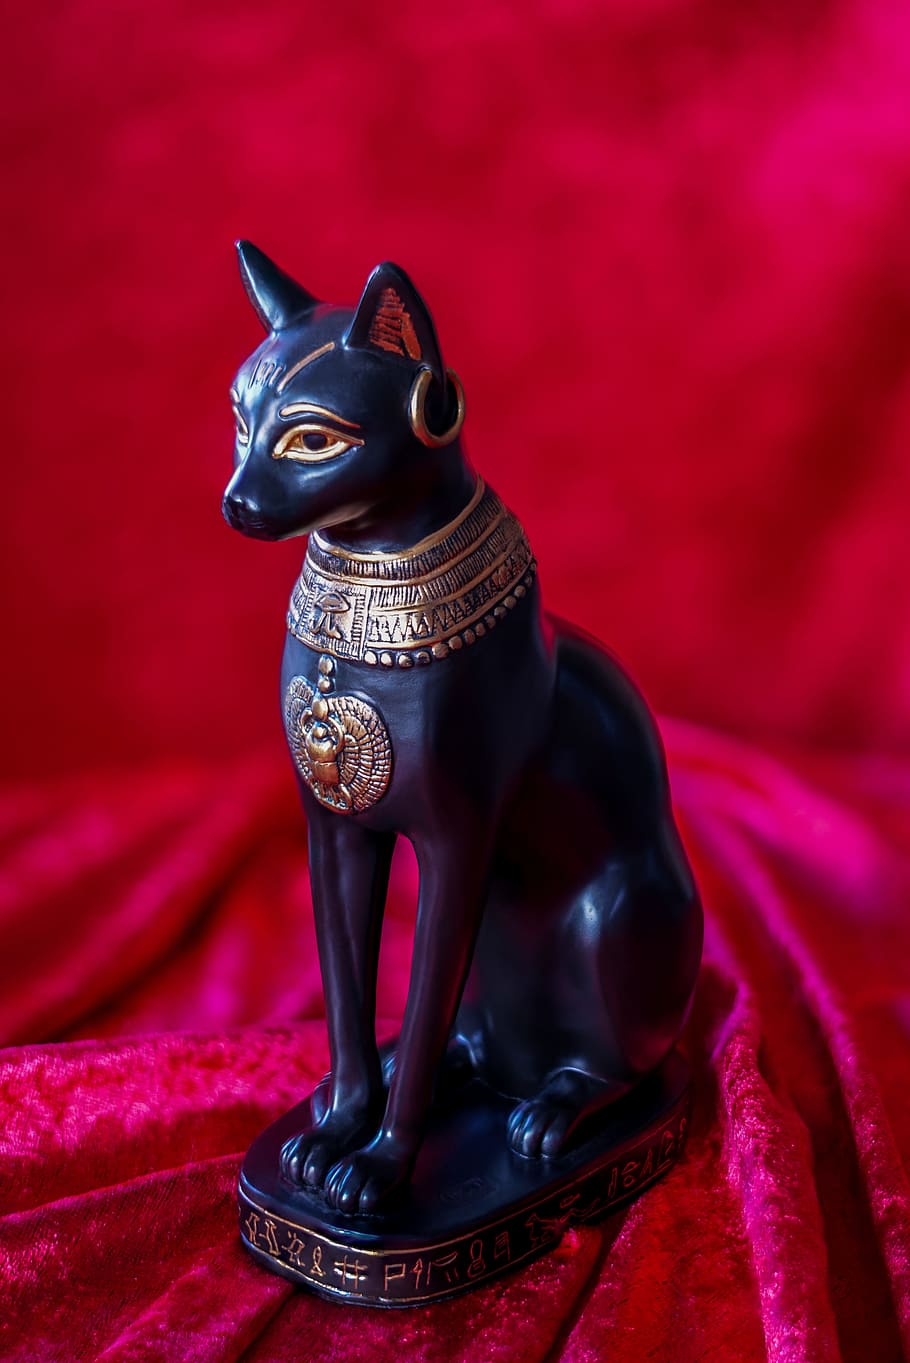 Bastet figurine, bastet cat, egypt, cat sculpture, statue, egyptian cat goddess